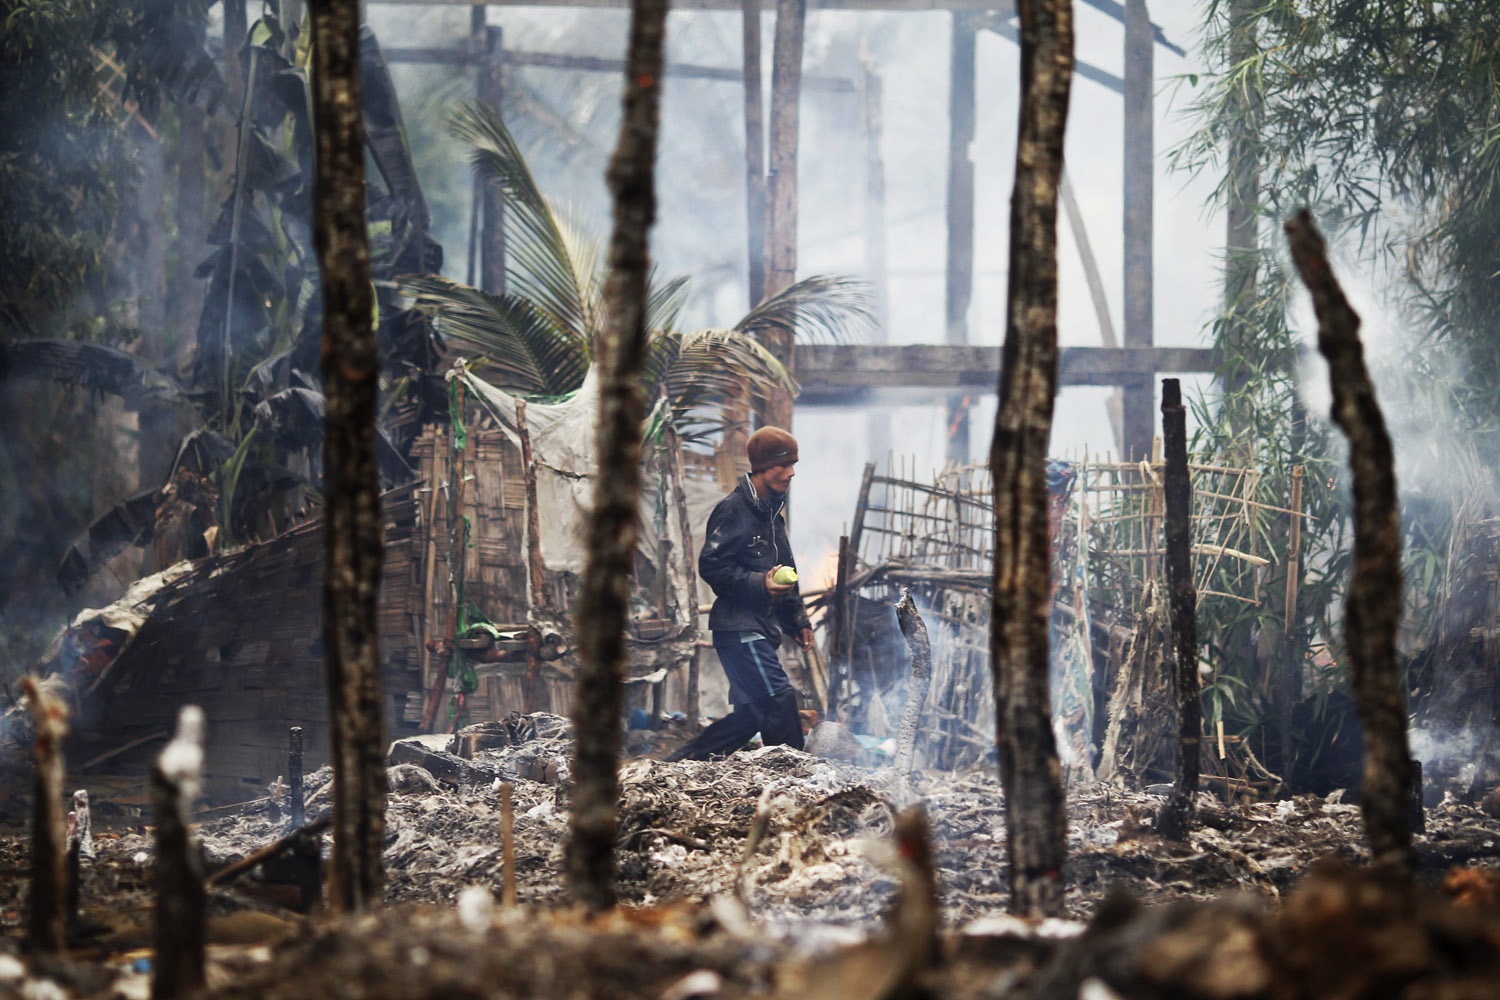 A man walks though a burnt Rohingya village during fighting between Buddhist Rakhine and Muslim Rohingya communities in Sittwe